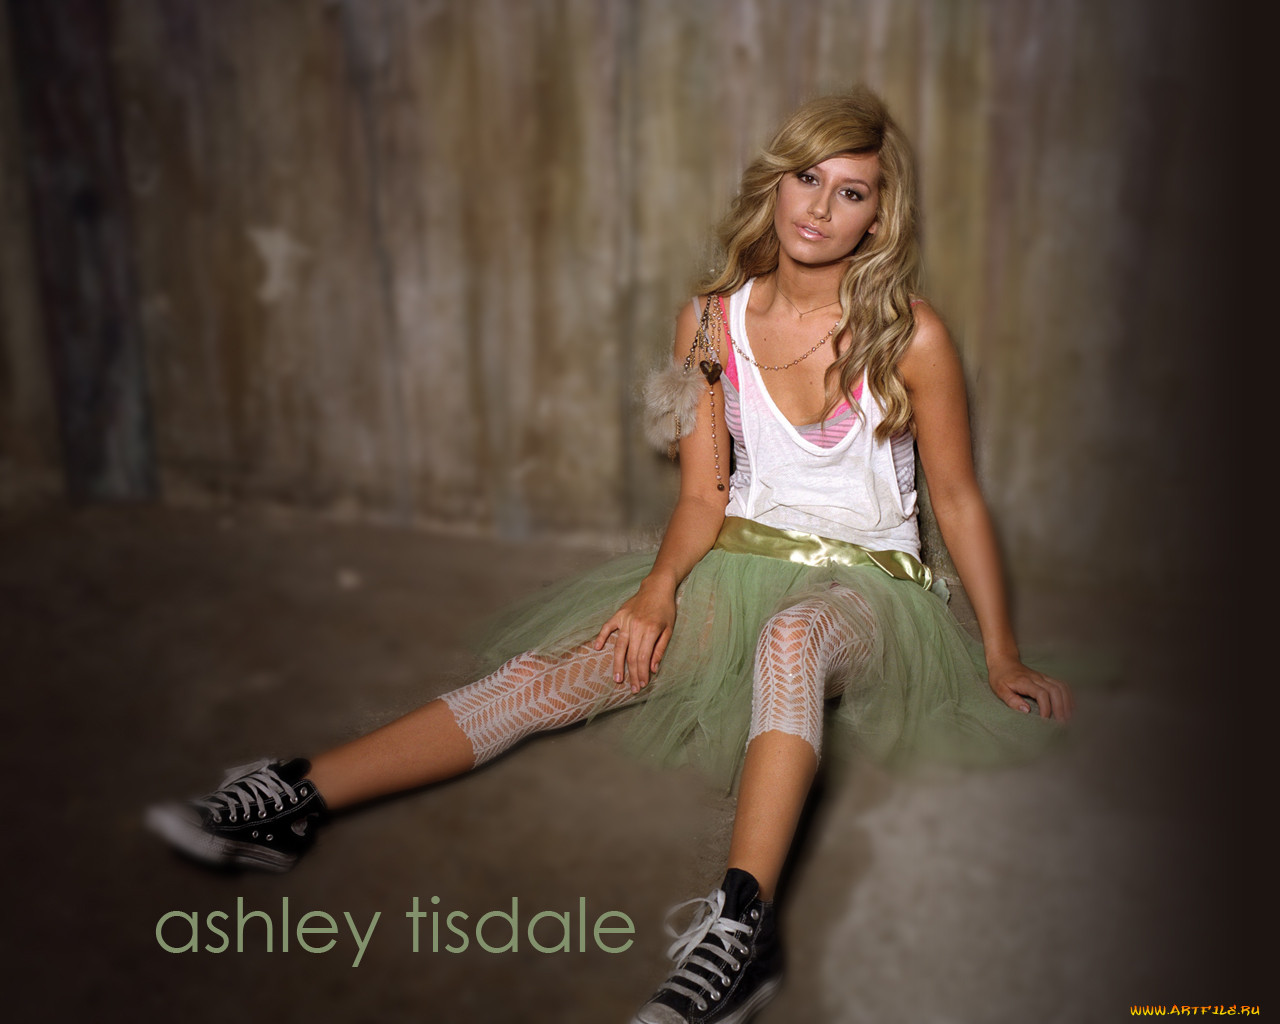 Ashley Tisdale, 